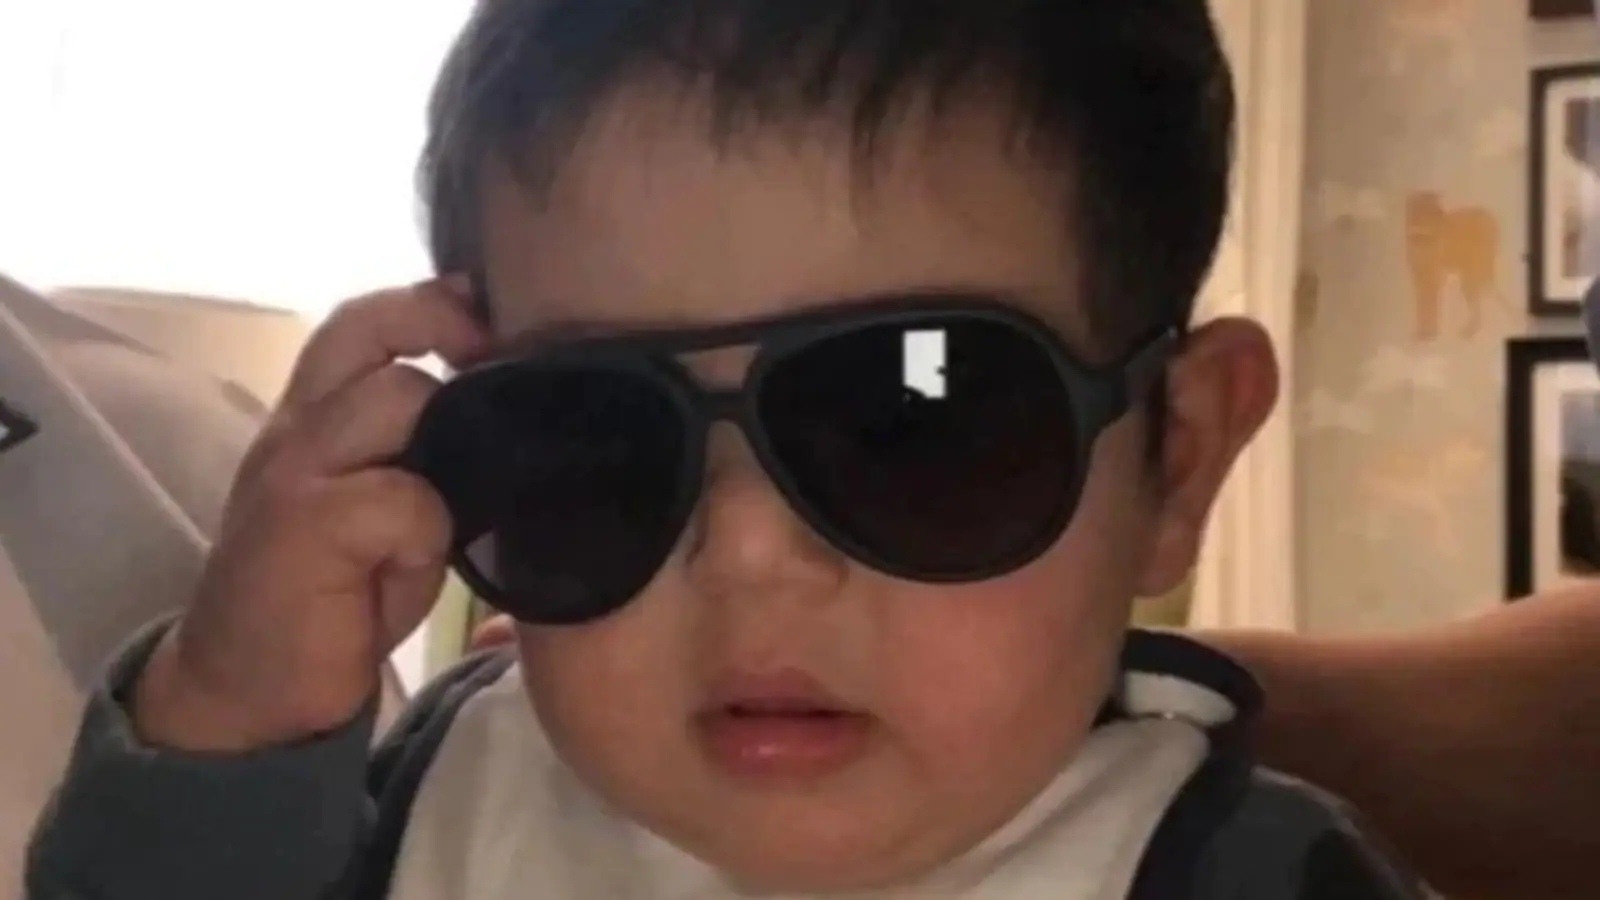 Saba Ali Khan shares ‘cutest pic’ of nephew Jehangir Ali Khan as he poses in shades, see here